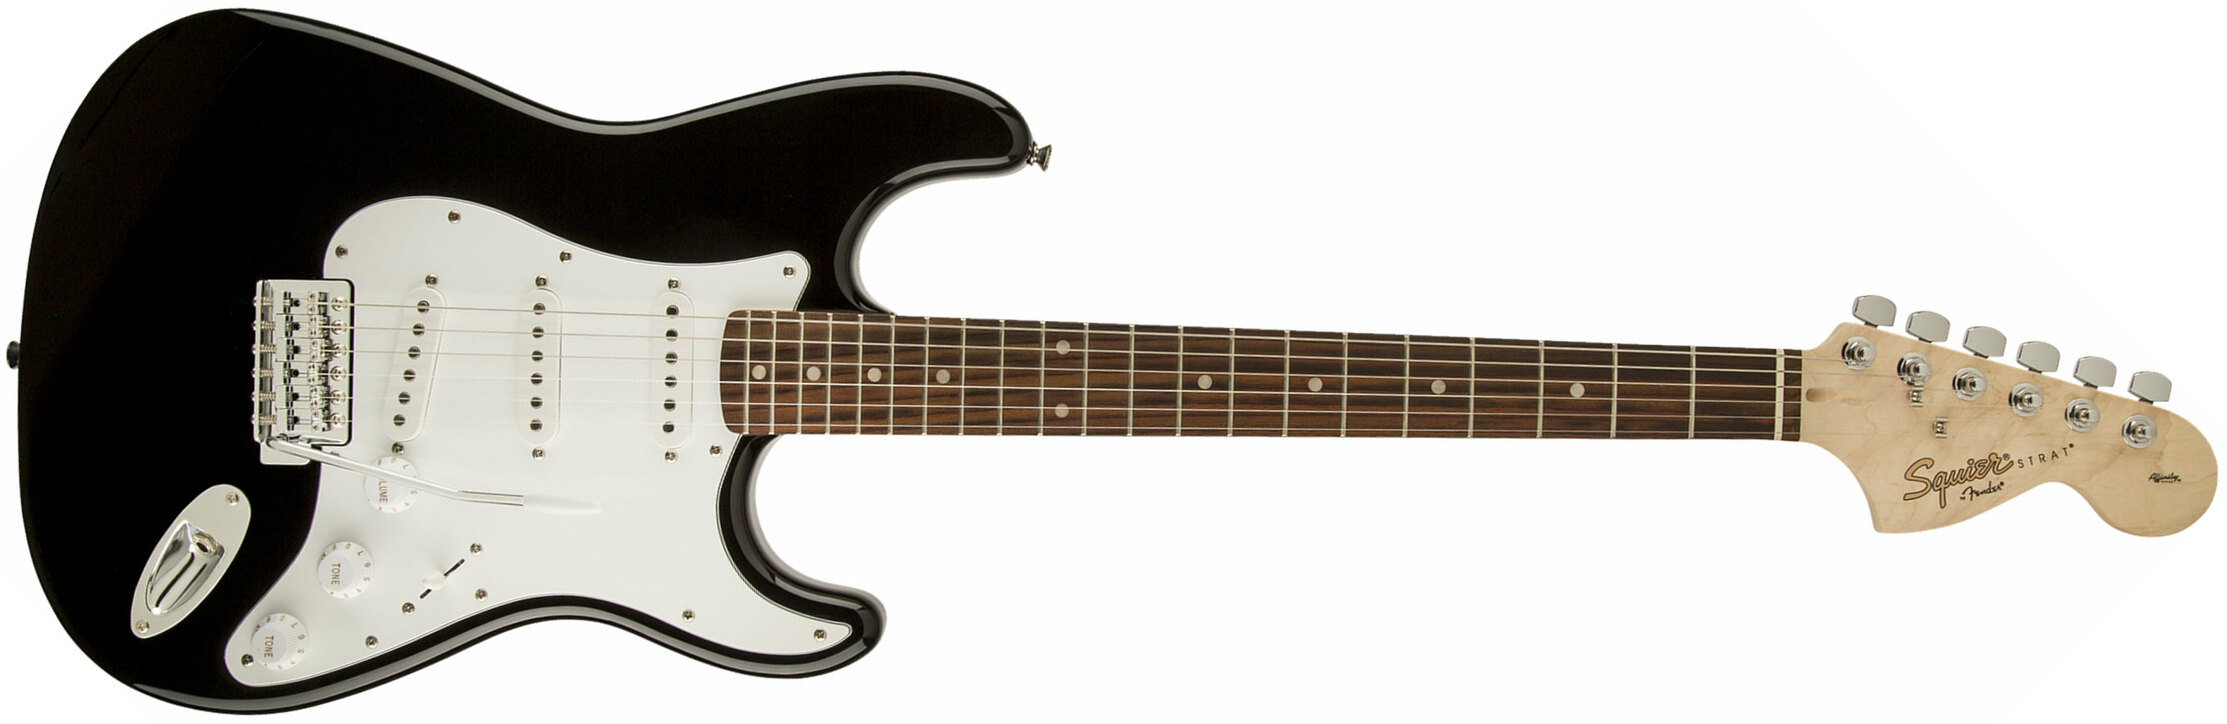 Squier Strat Affinity Series 3s Lau - Black - Str shape electric guitar - Main picture